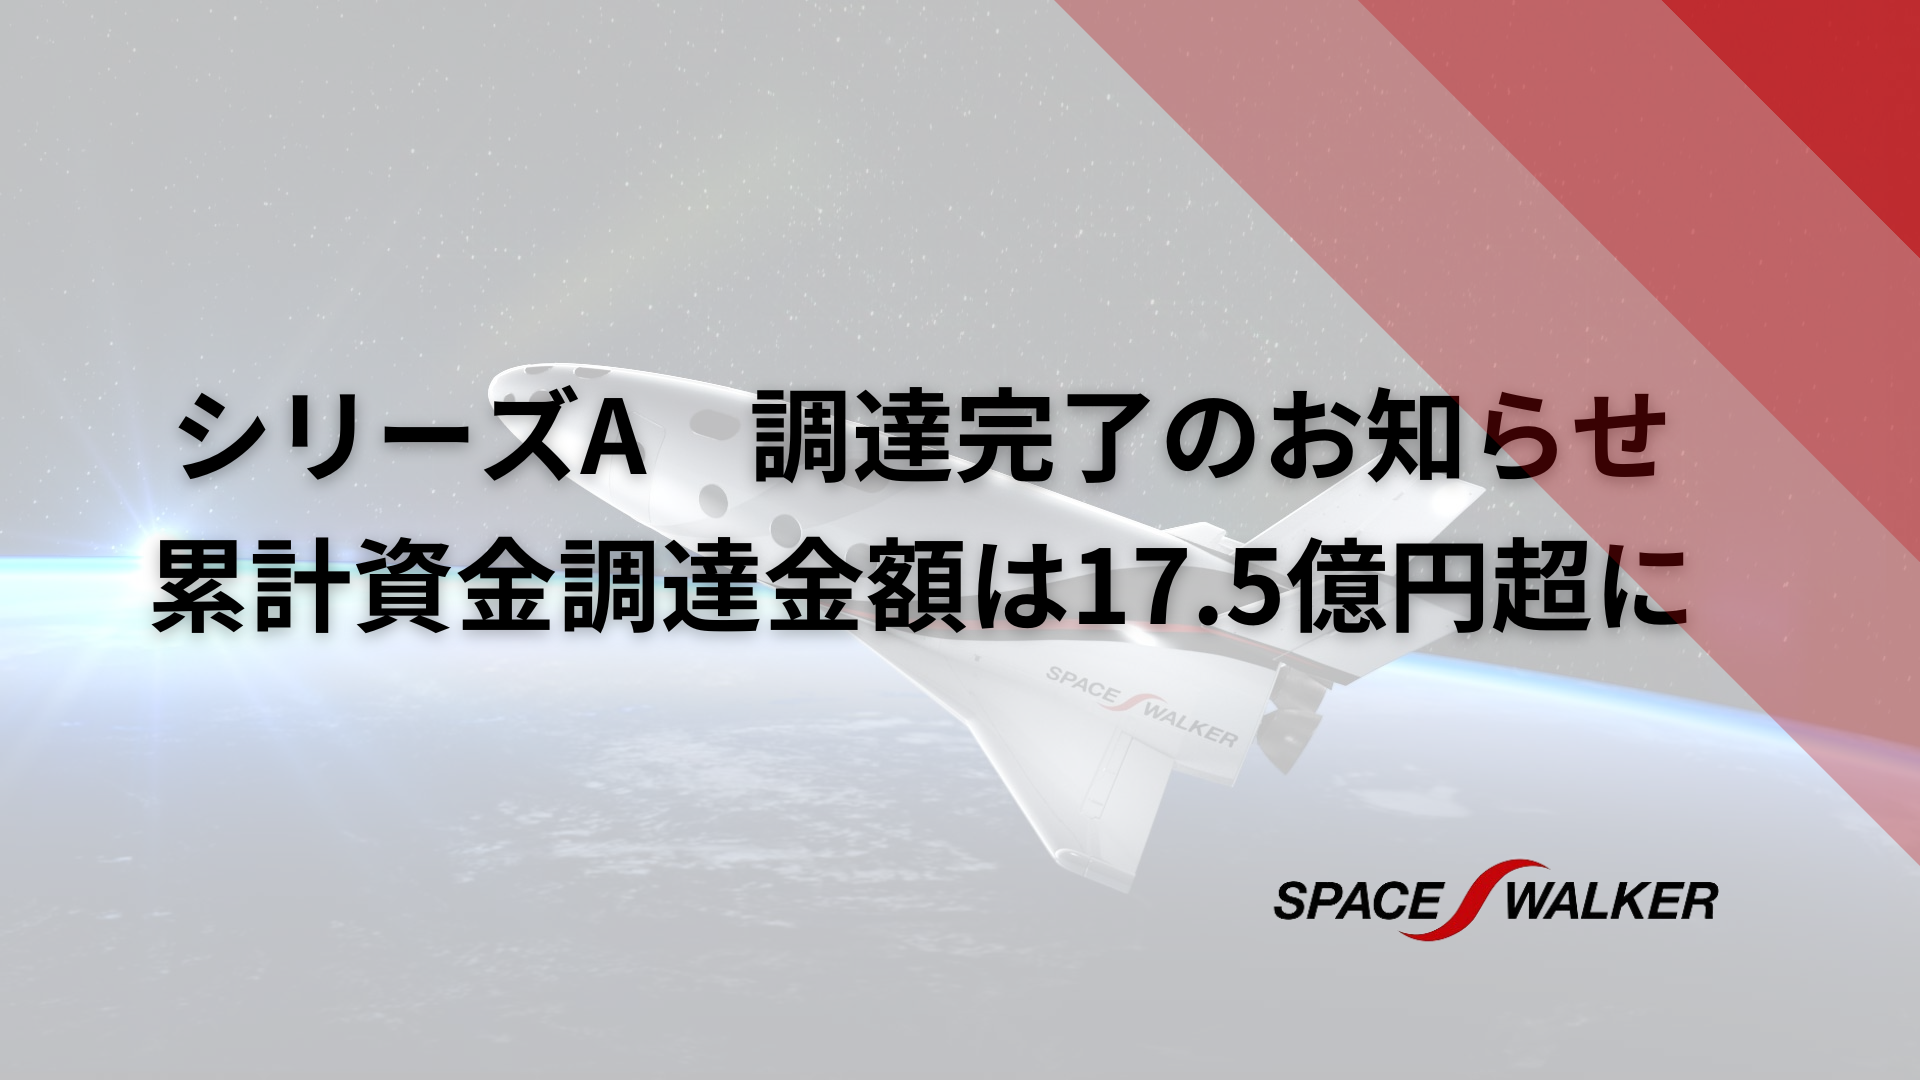 SPACE WALKER、リアライズグループほかから新たに7.13億円を調達